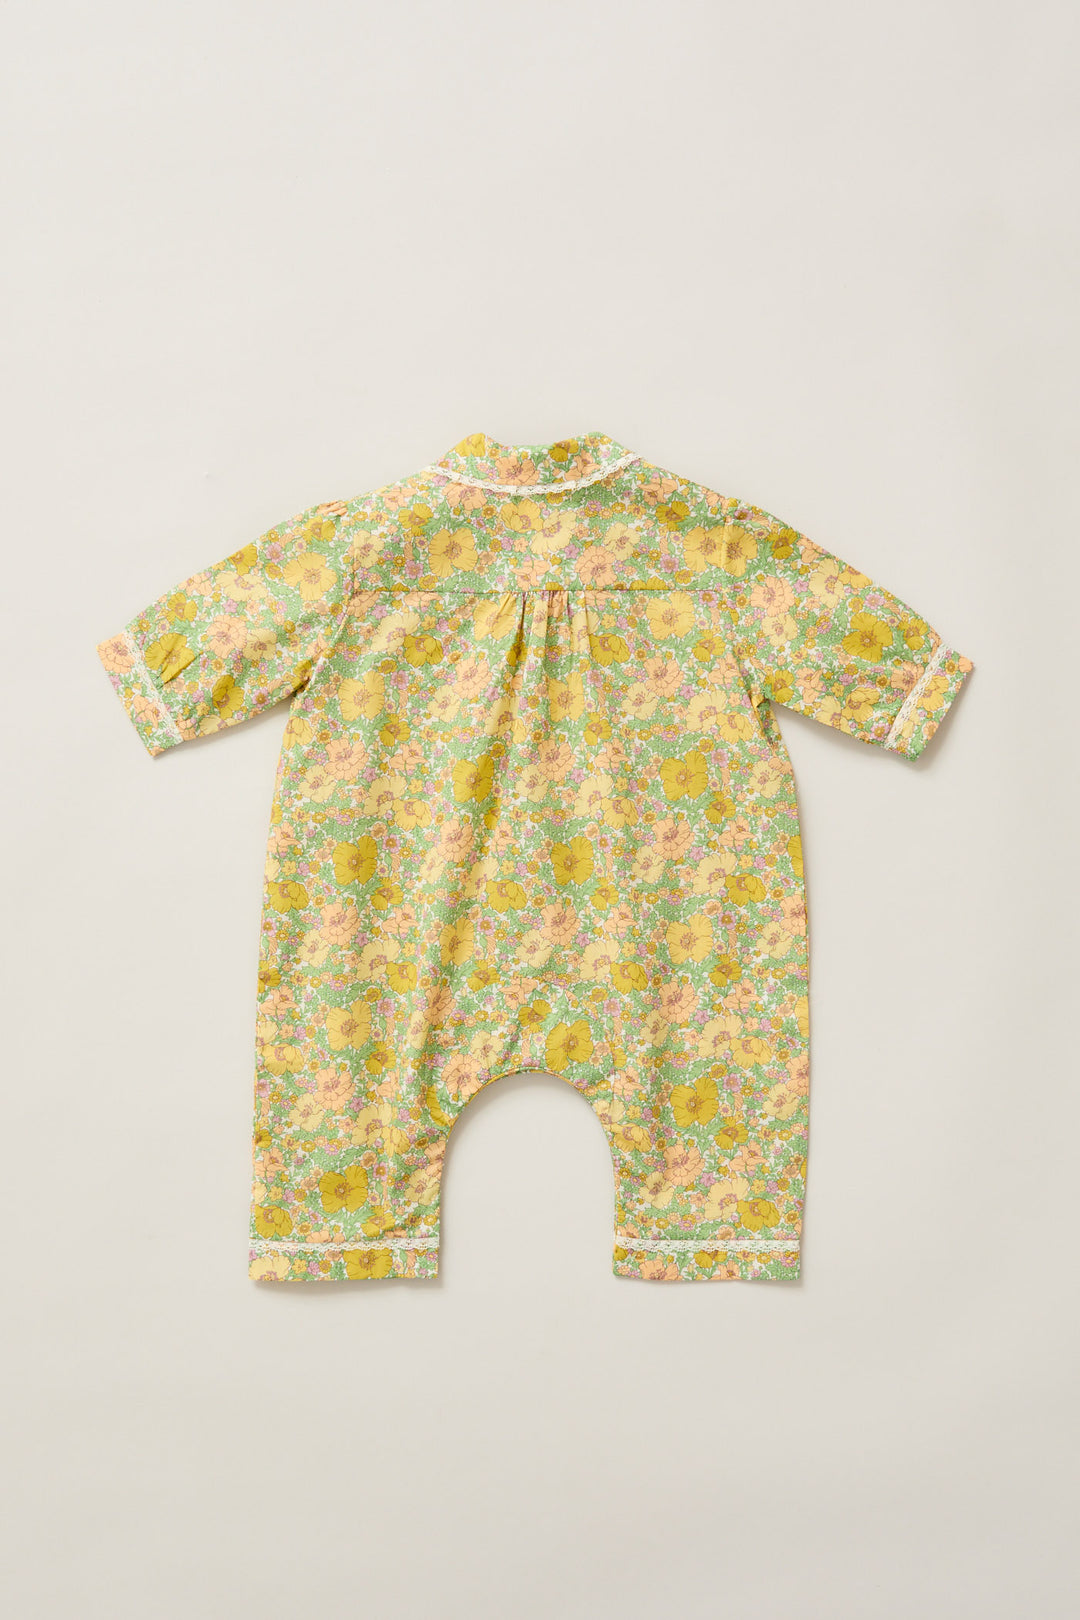 Baby Pyjama in California Poppy Liberty Print